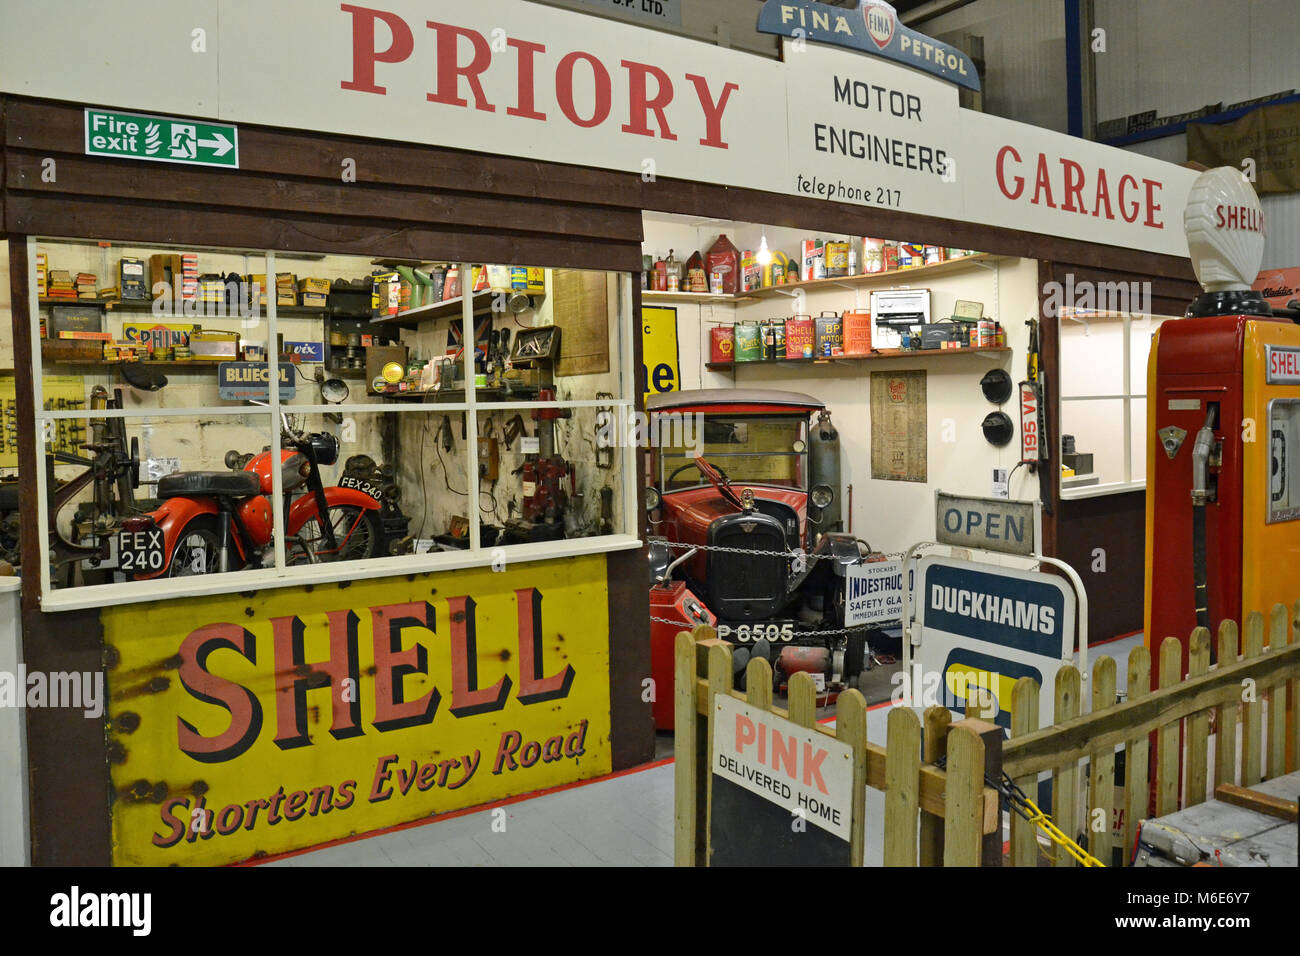 Priory Garage Motor Engineers. Motor vehicle workshop at Ipswich Transport Museum, Suffolk, England Stock Photo